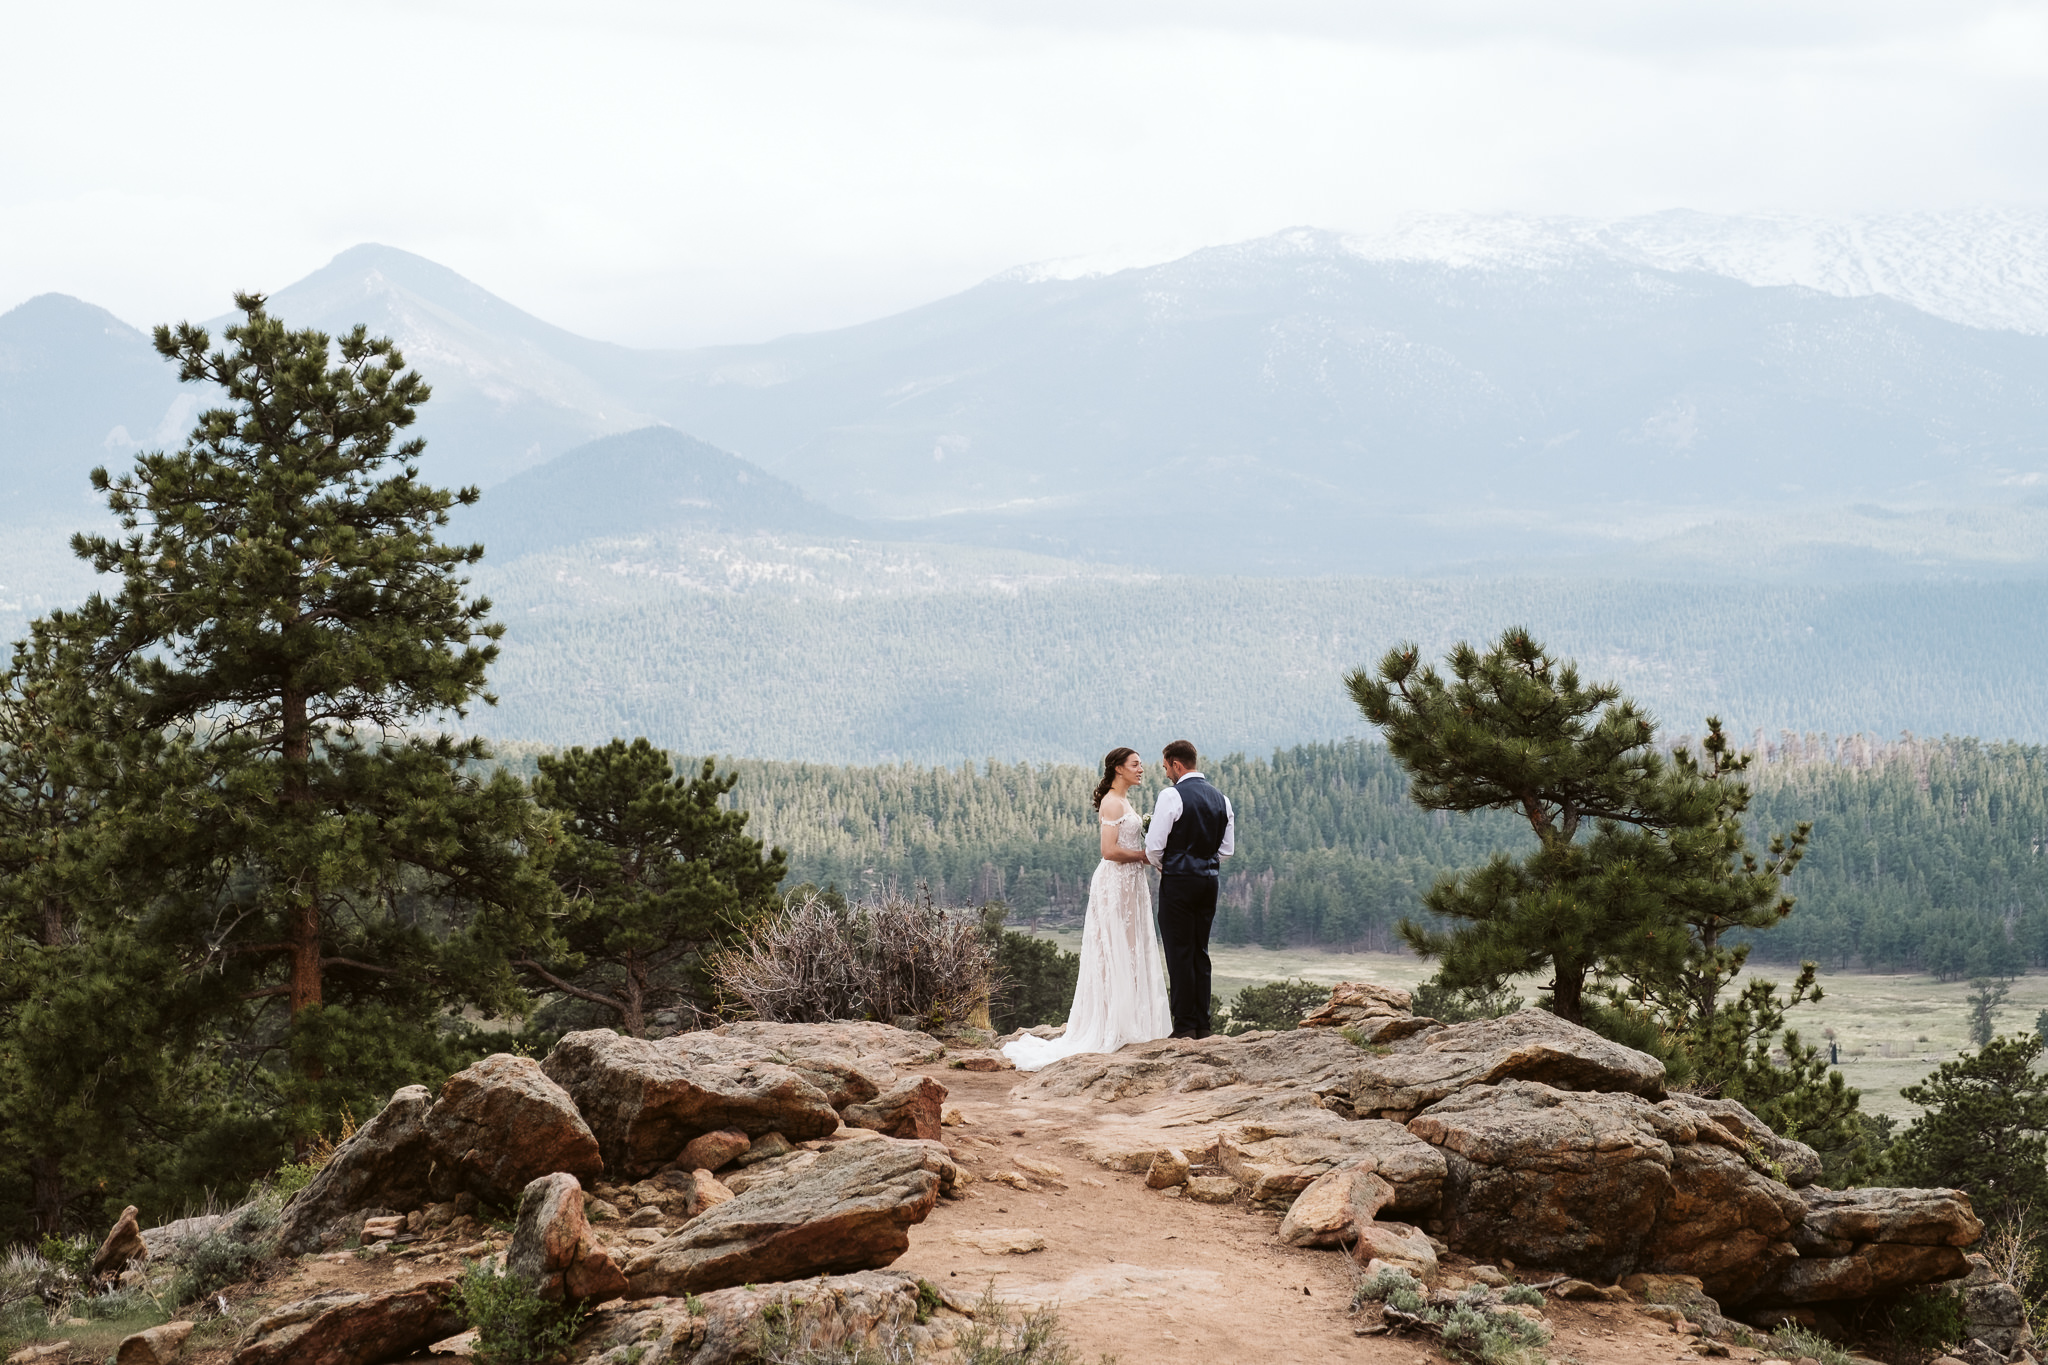 State Park weddings in Colorado